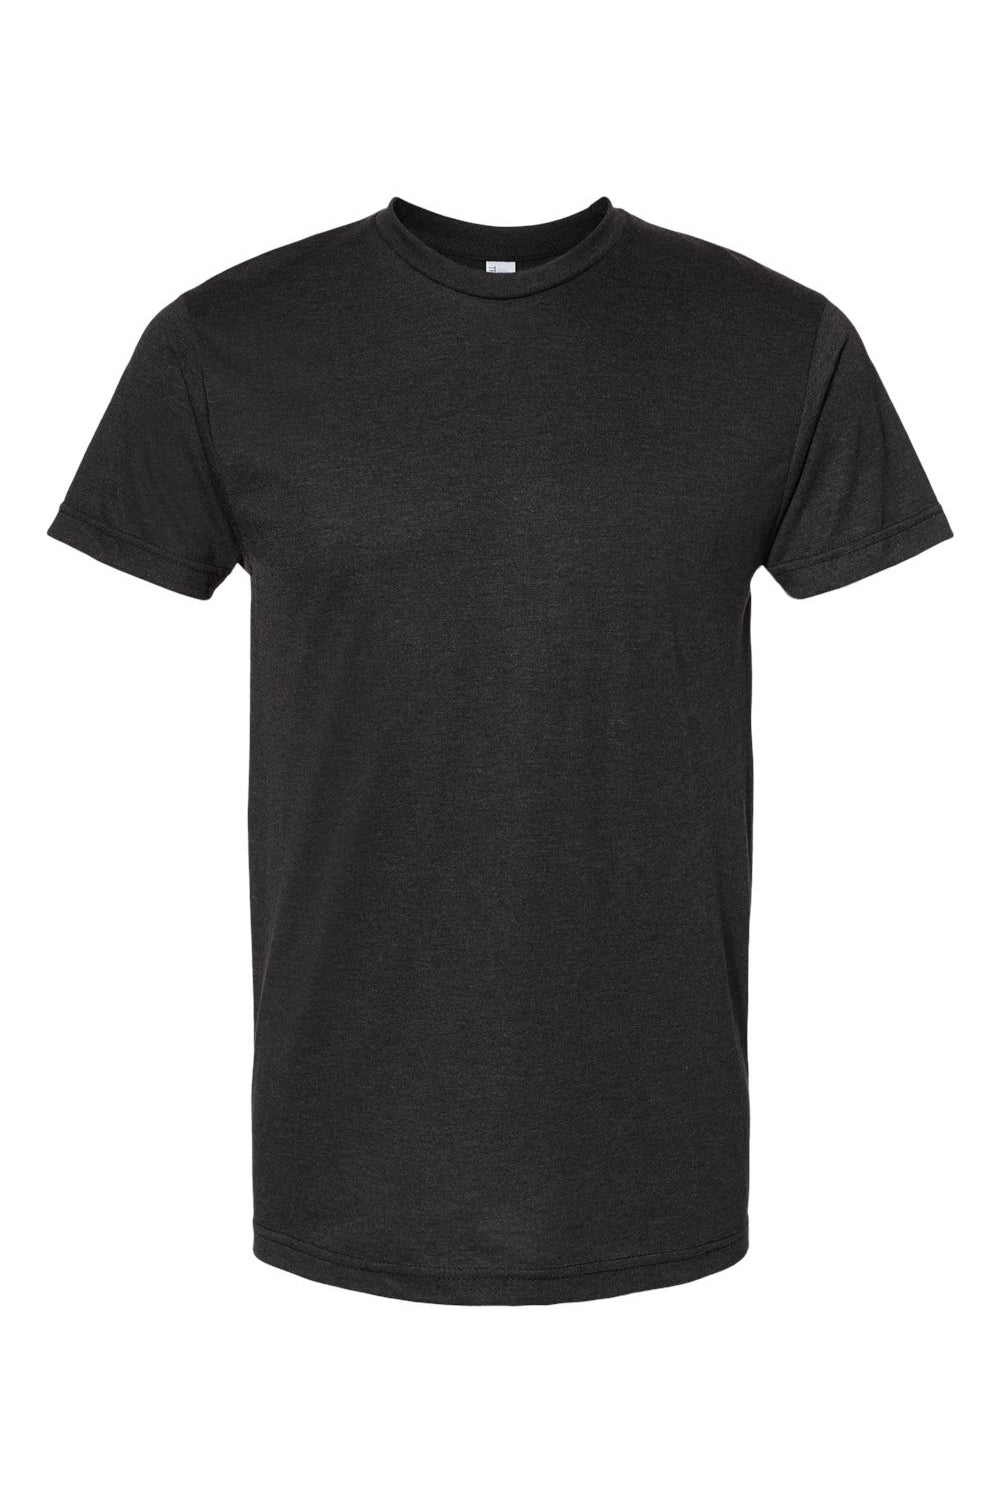 Bayside 5710 Mens USA Made Short Sleeve Crewneck T-Shirt Black Flat Front